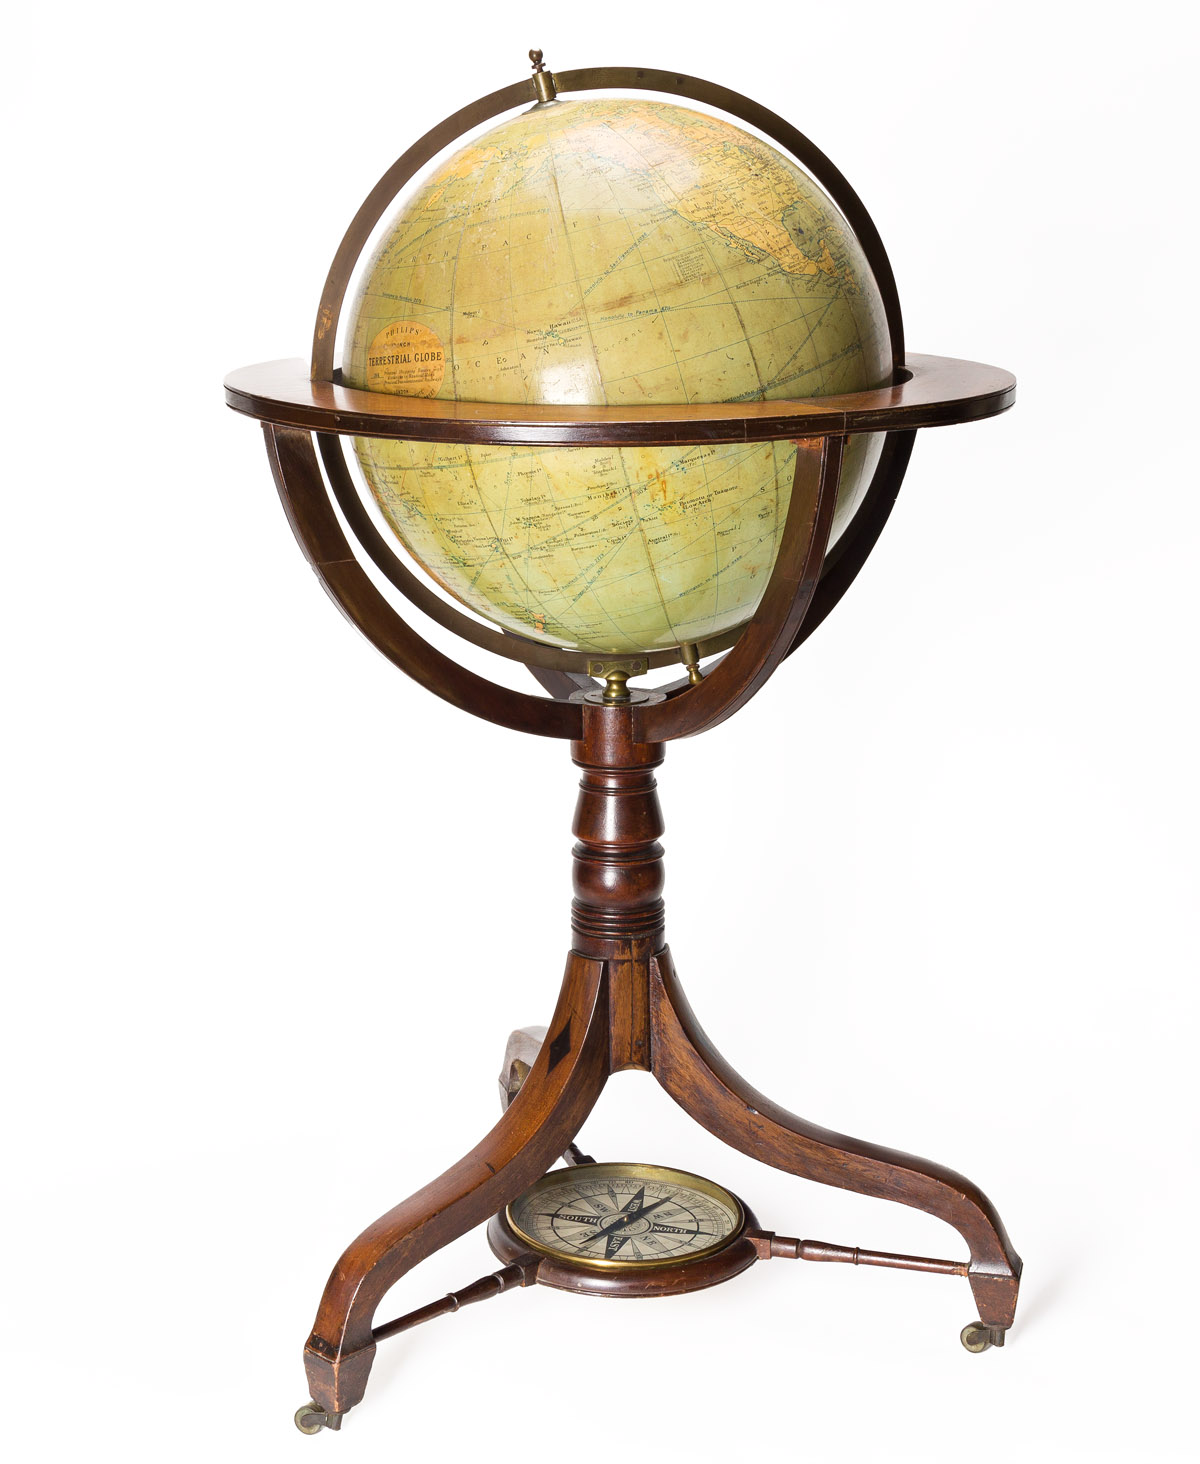 Philips' 18 Inch Terrestrial Globe.